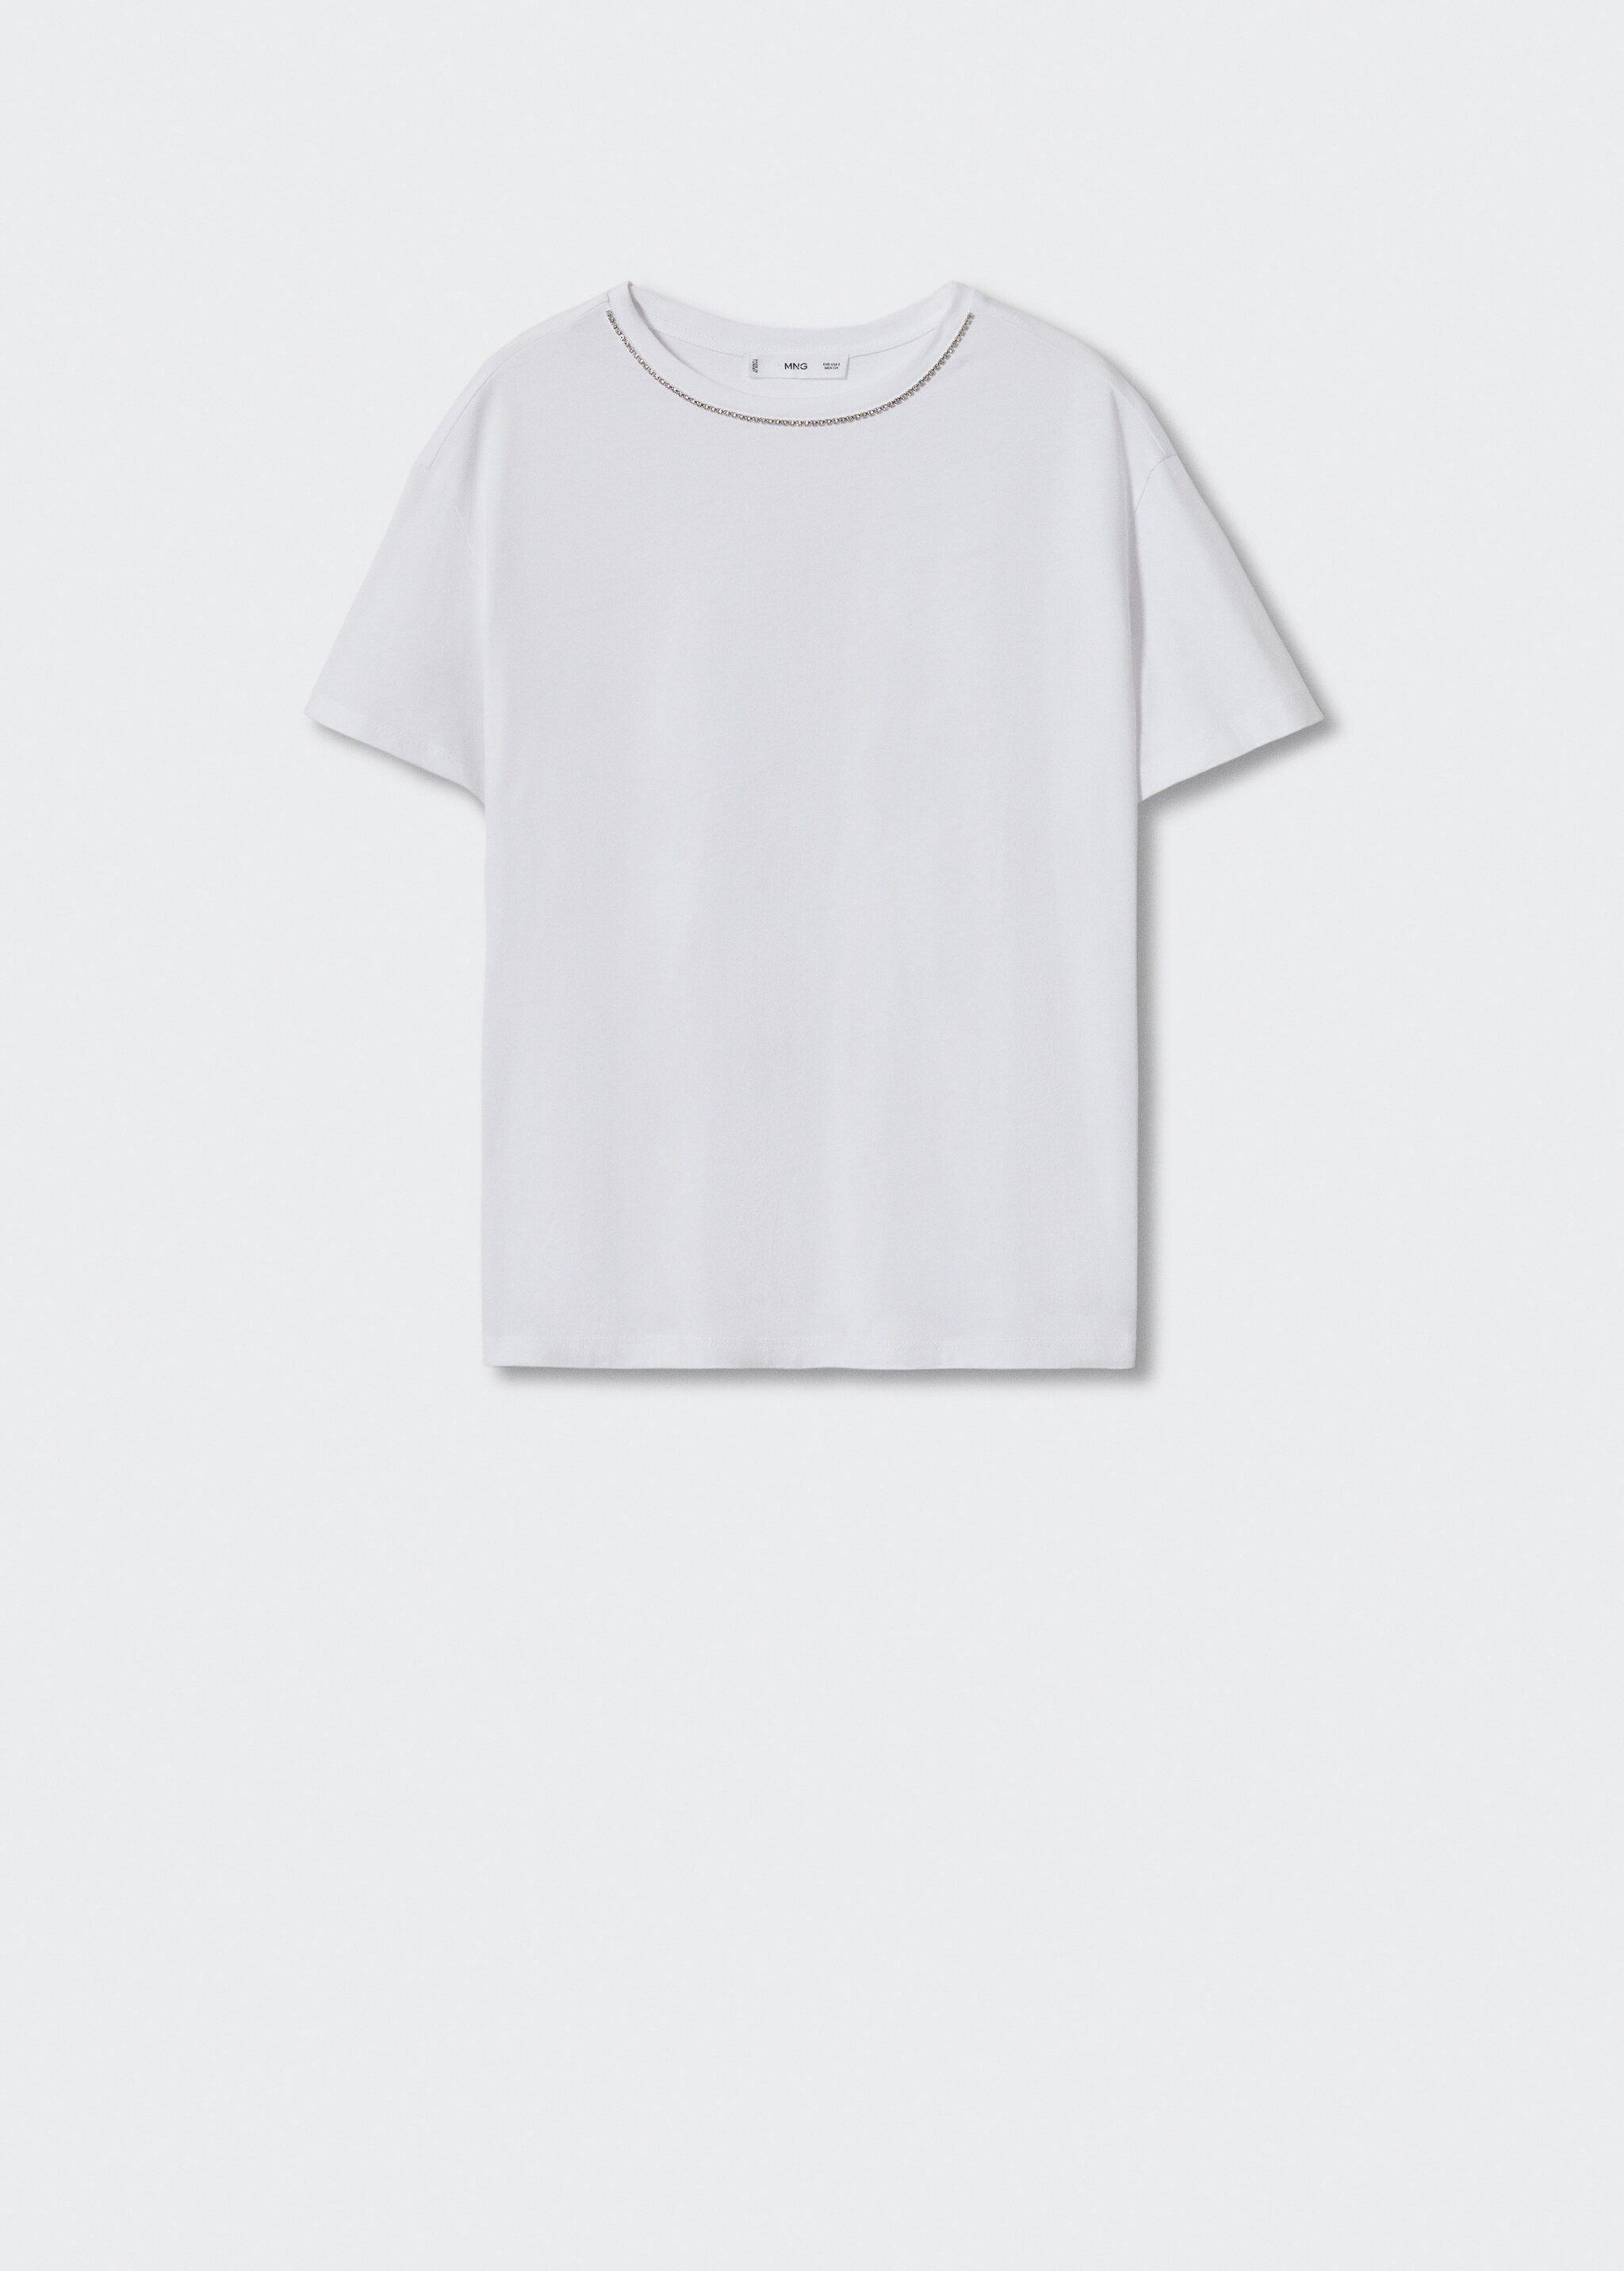 Camiseta algodón strass - Artículo sin modelo